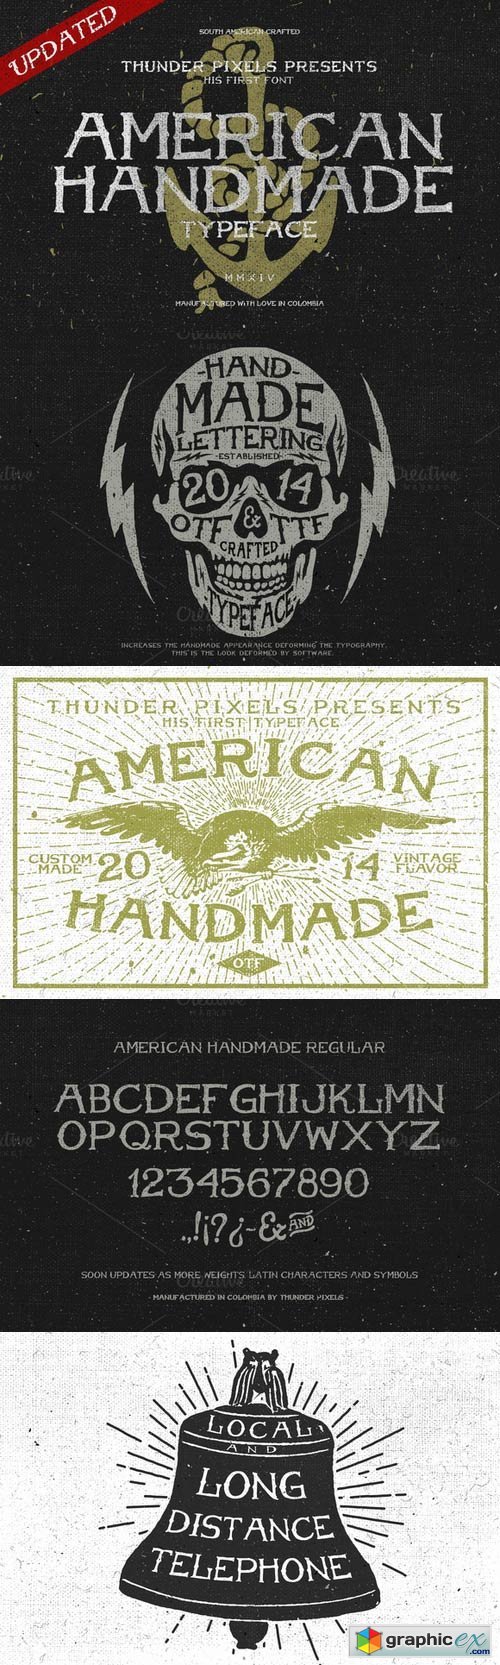 American Handmade Typeface 